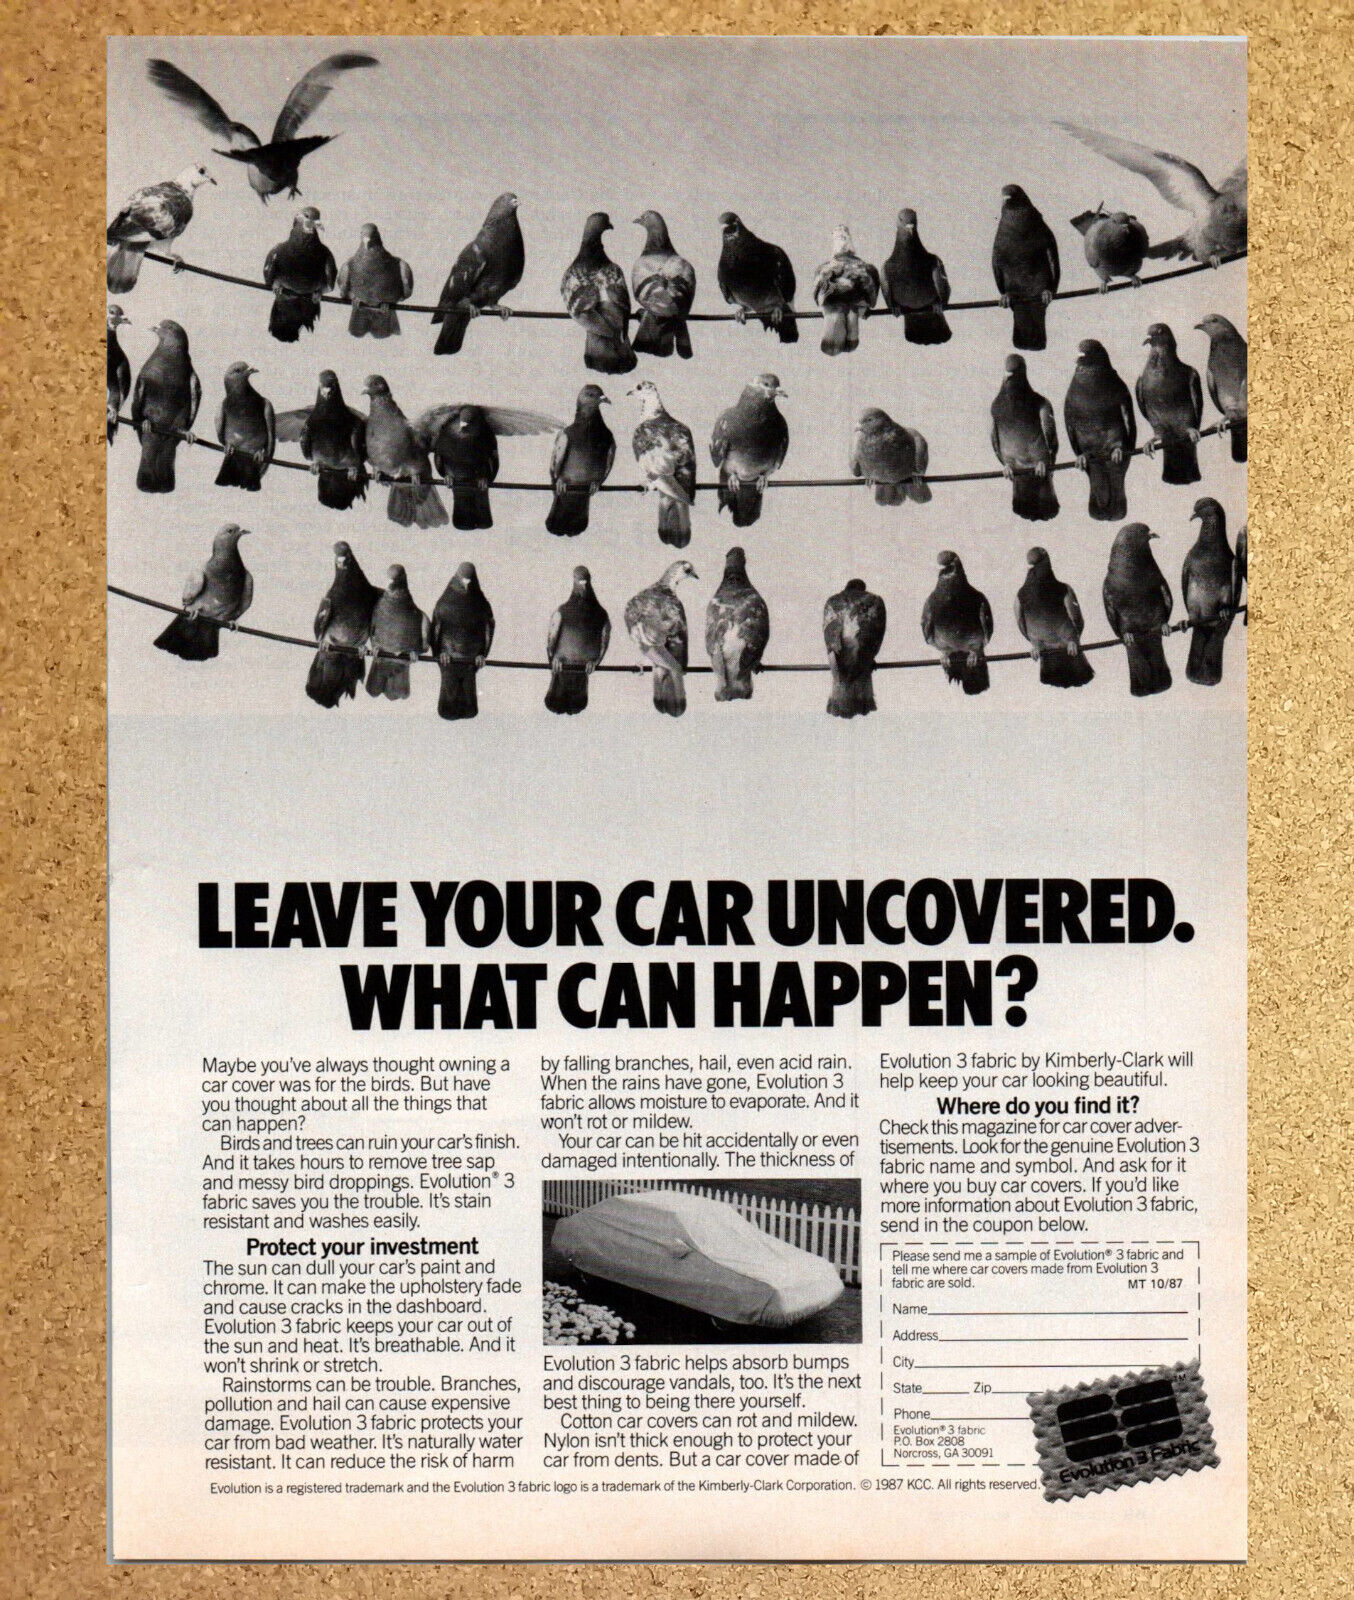 Evolution 3 Fabric Car Cover Bird Dropping - Vintage Print Ad Ephemera Art 1987